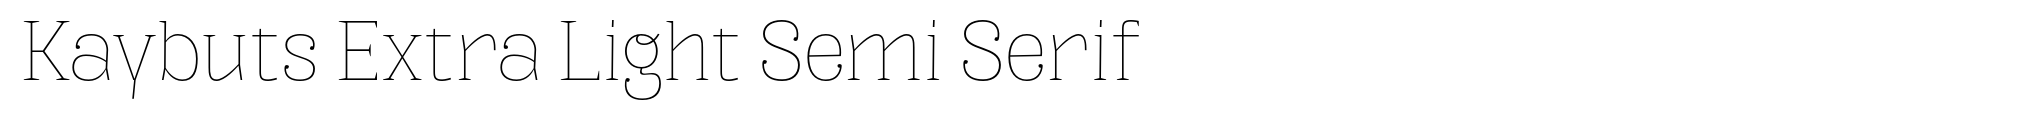 Kaybuts Extra Light Semi Serif image